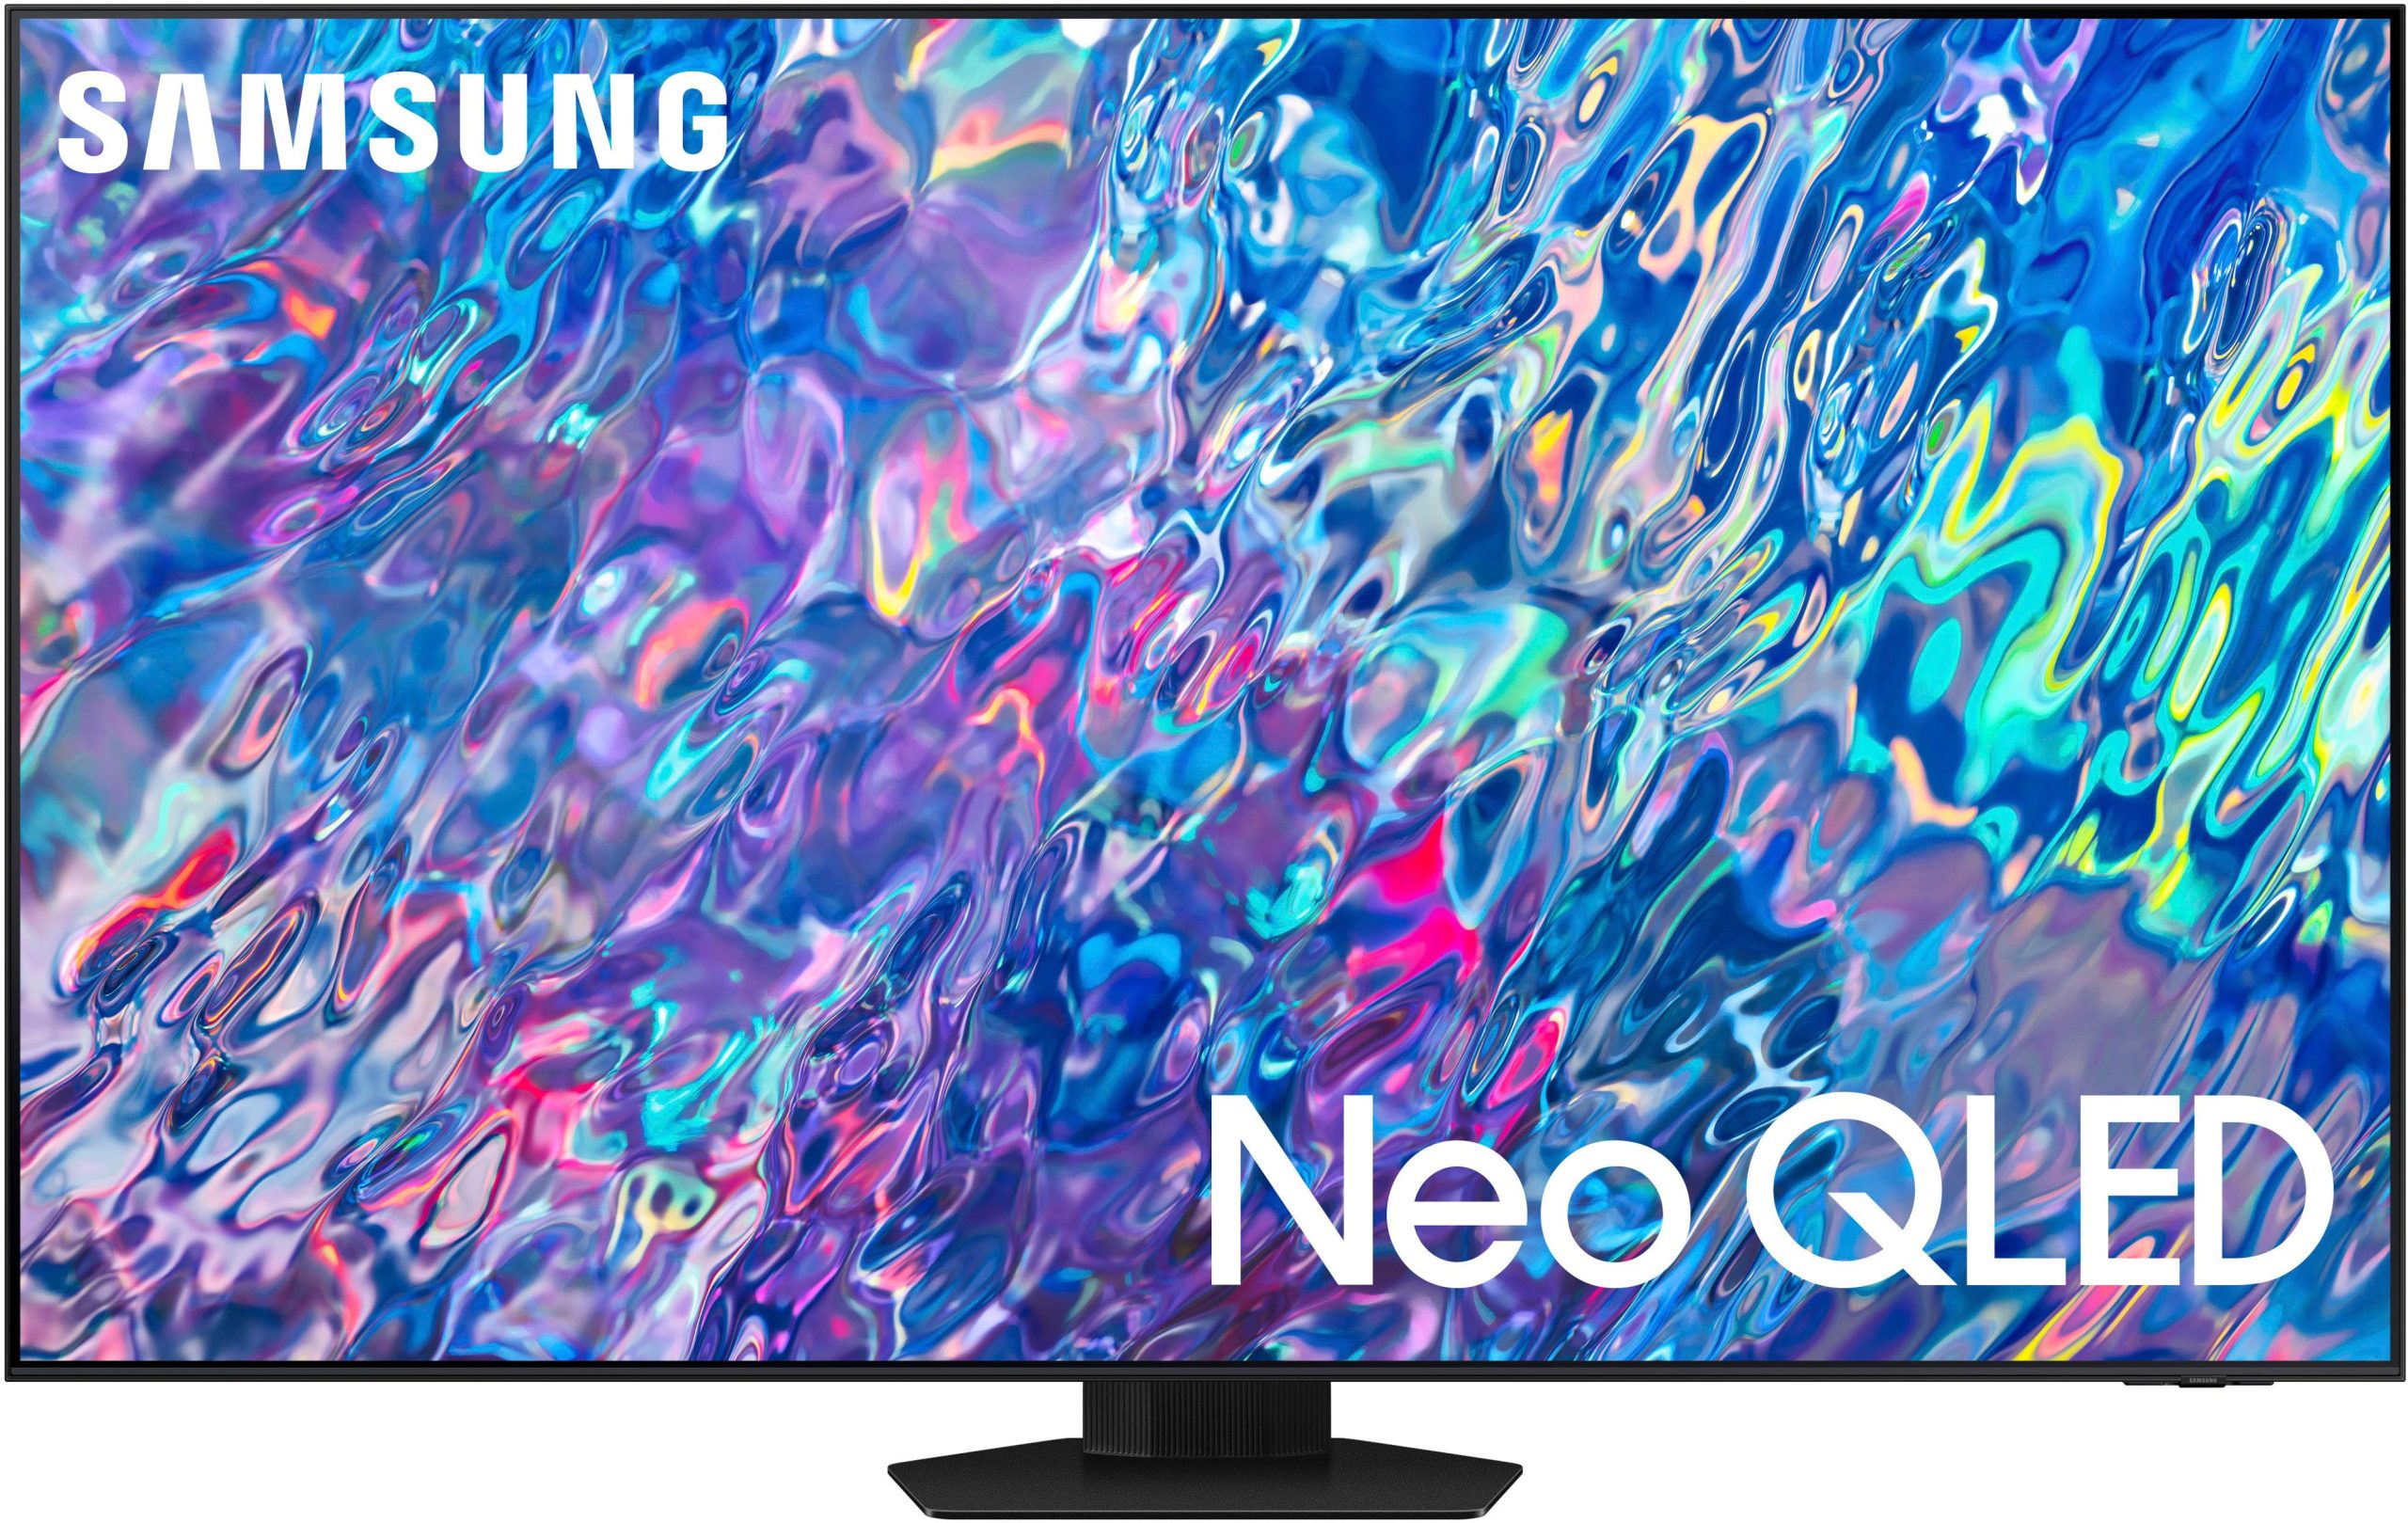 Samsung – 55” Class QN85B Neo QLED 4K Smart Tizen TV – Just $1,299.99 at Best Buy